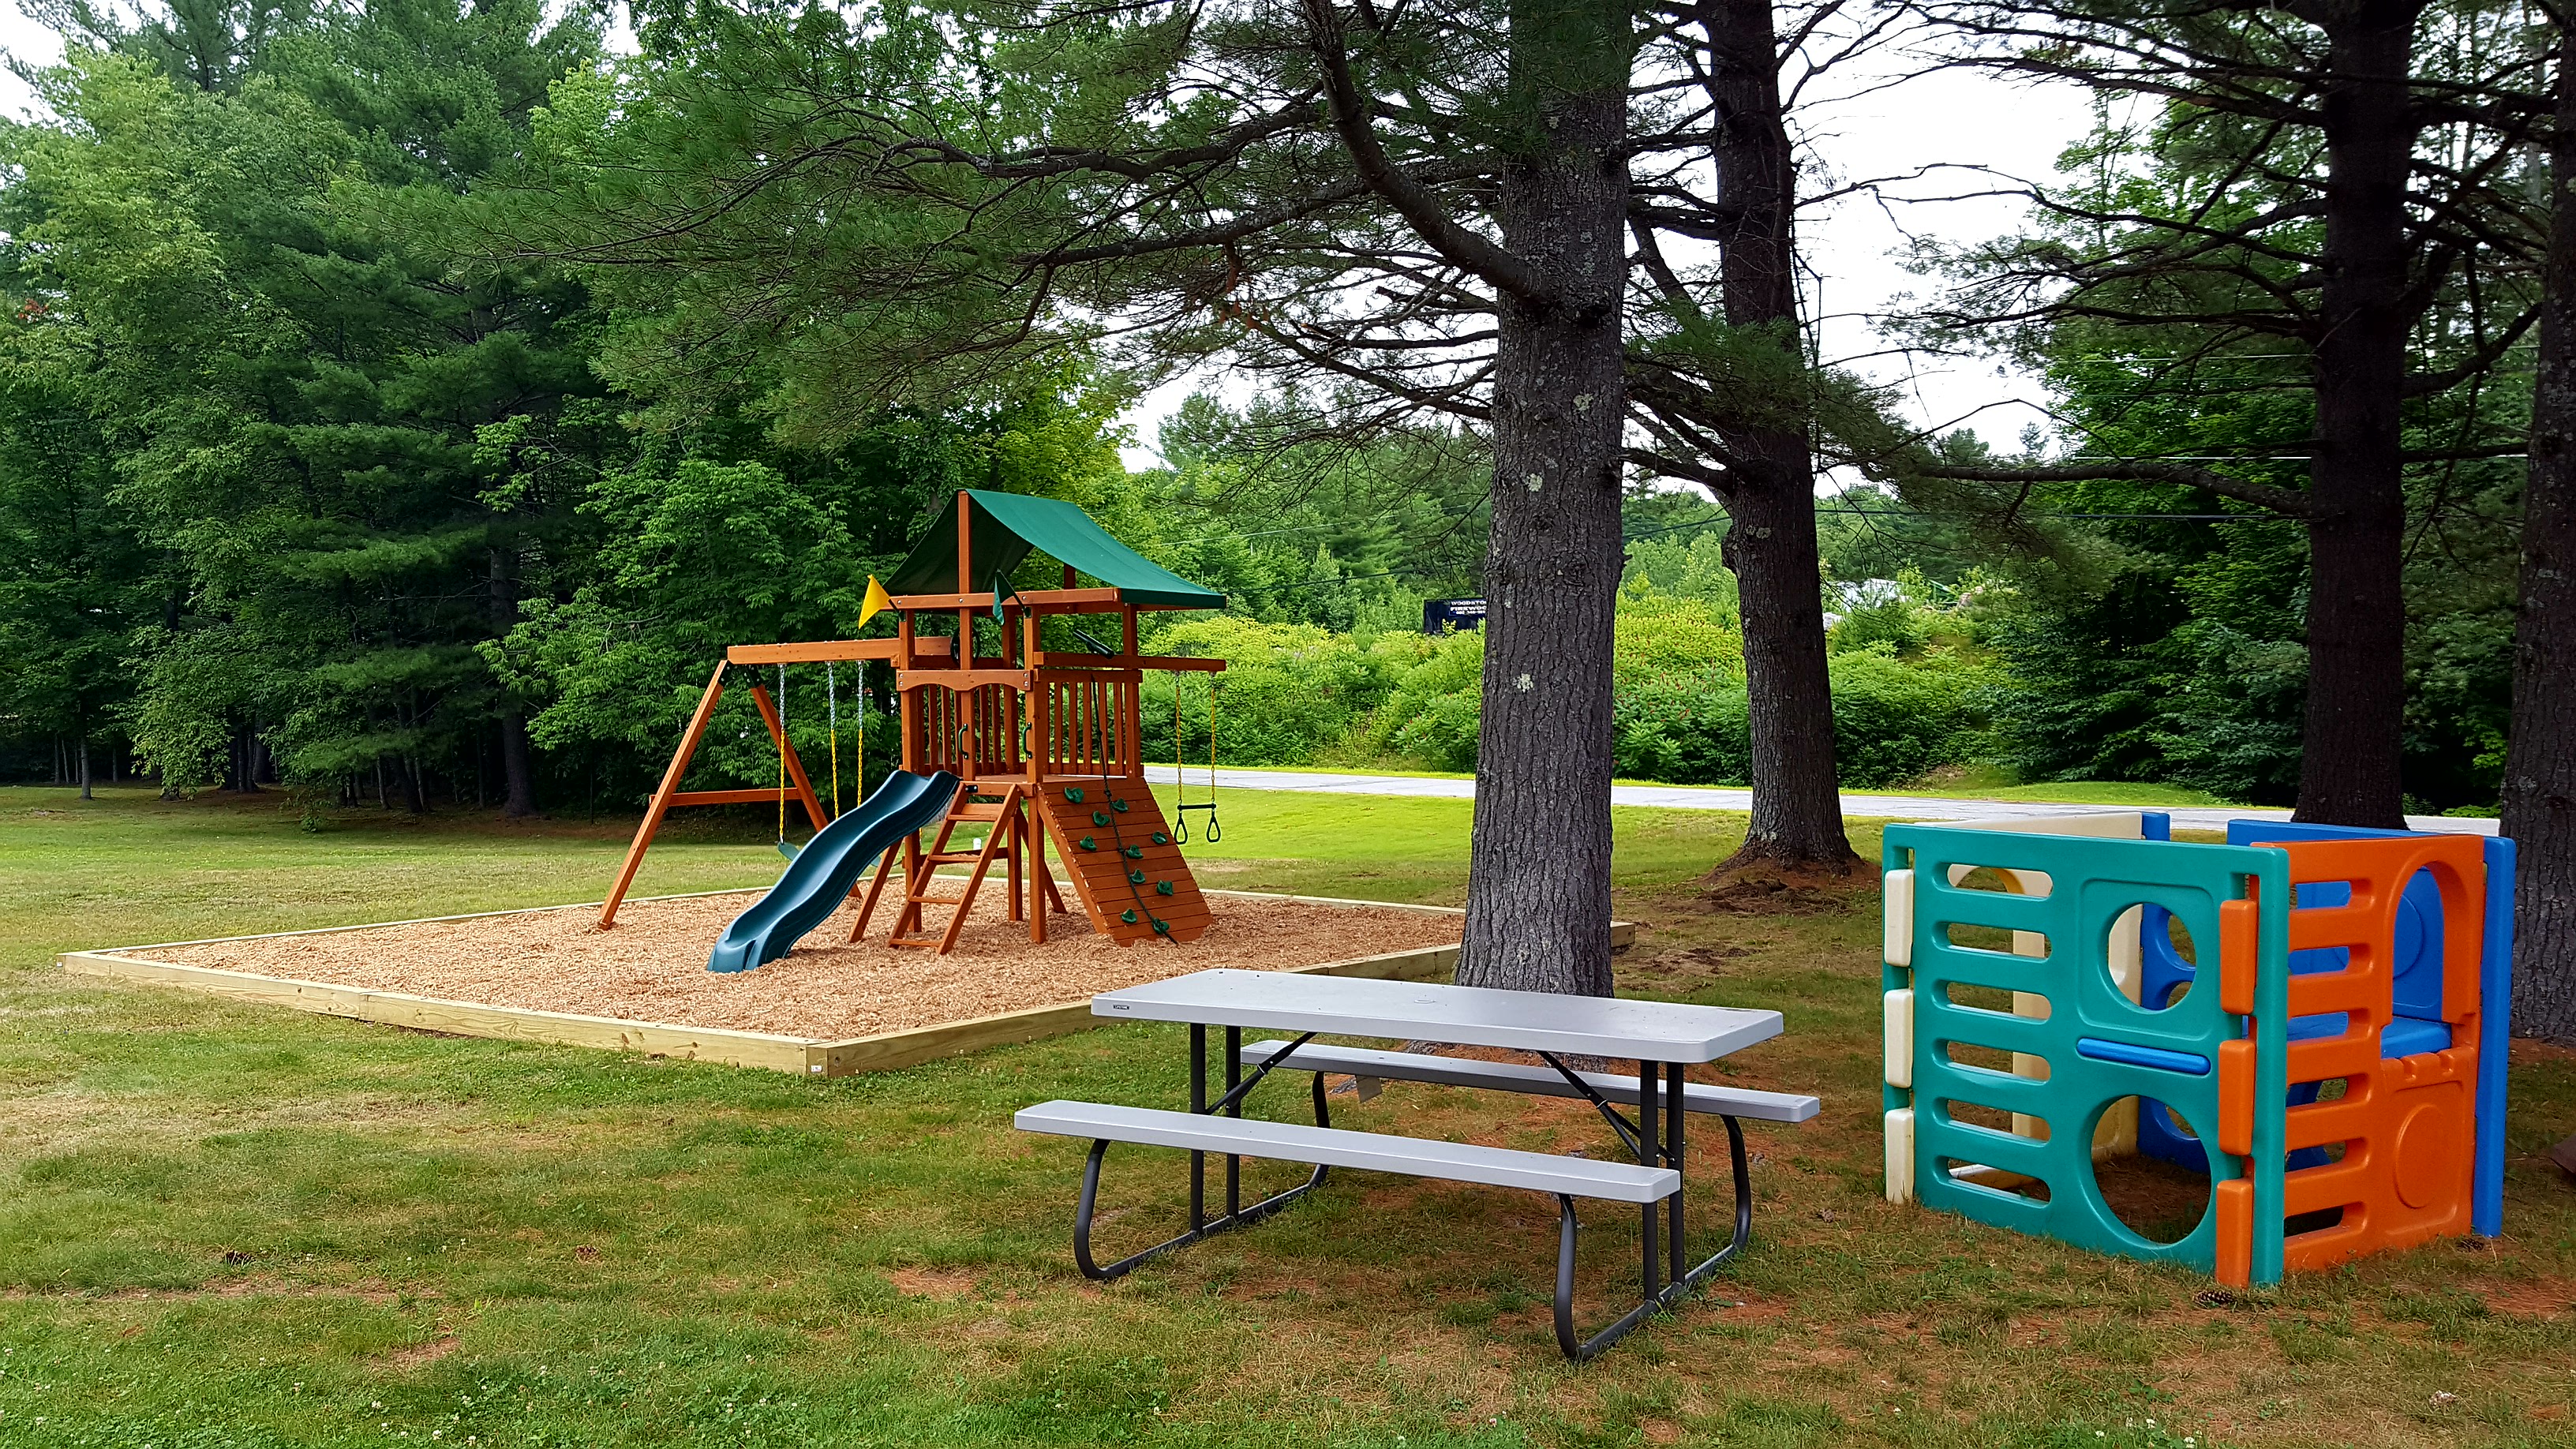 Playground and picnic bench